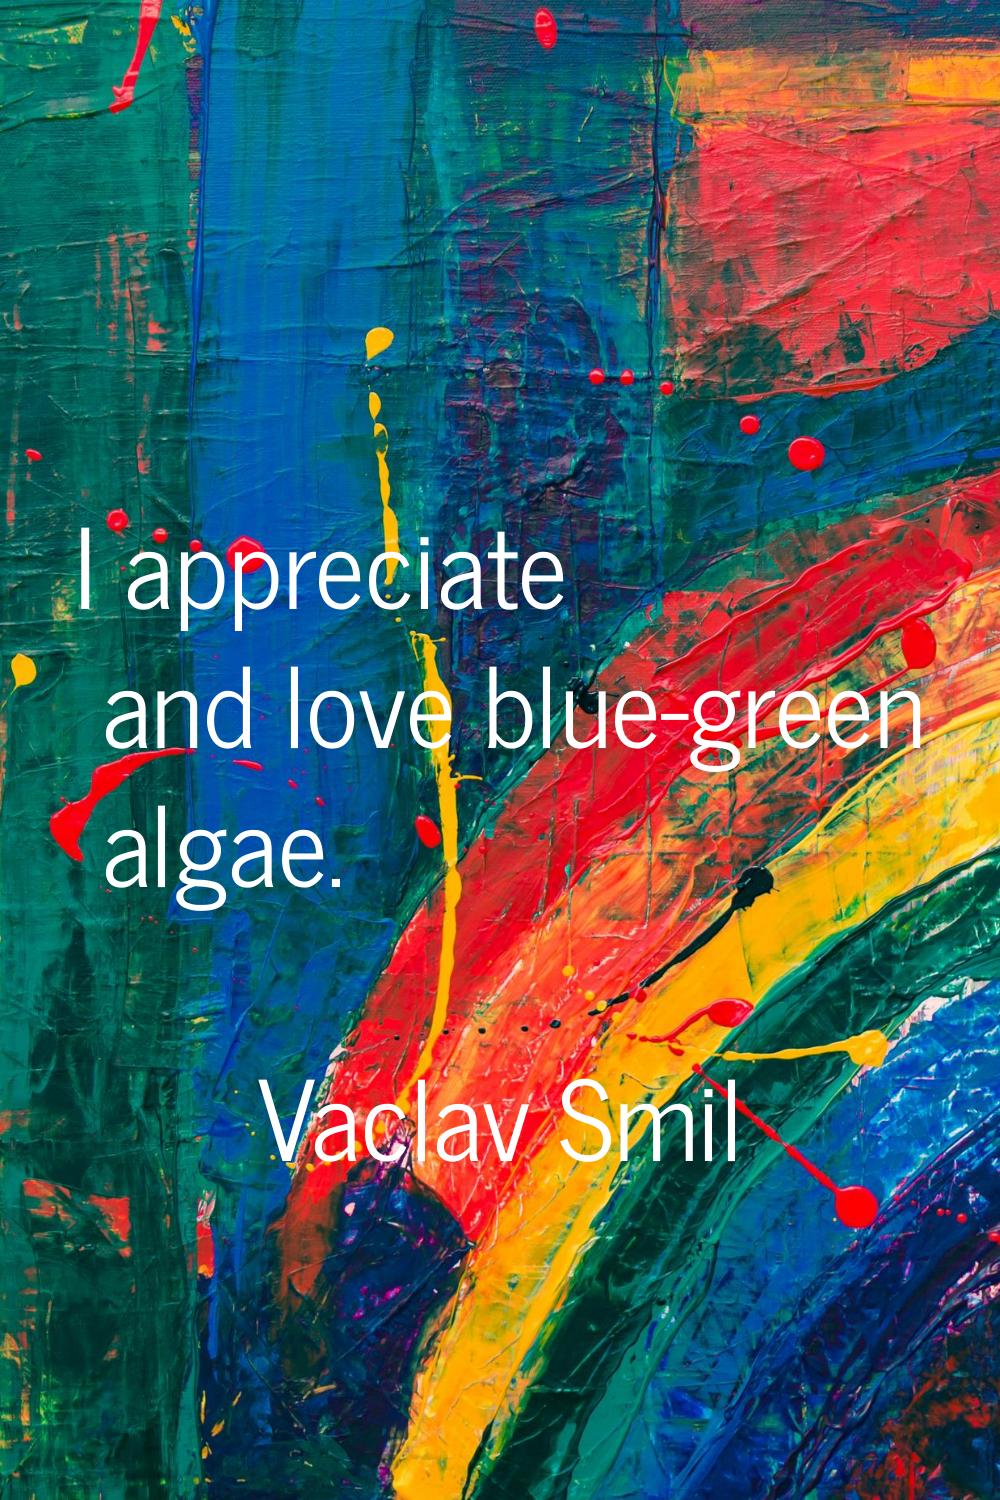 I appreciate and love blue-green algae.